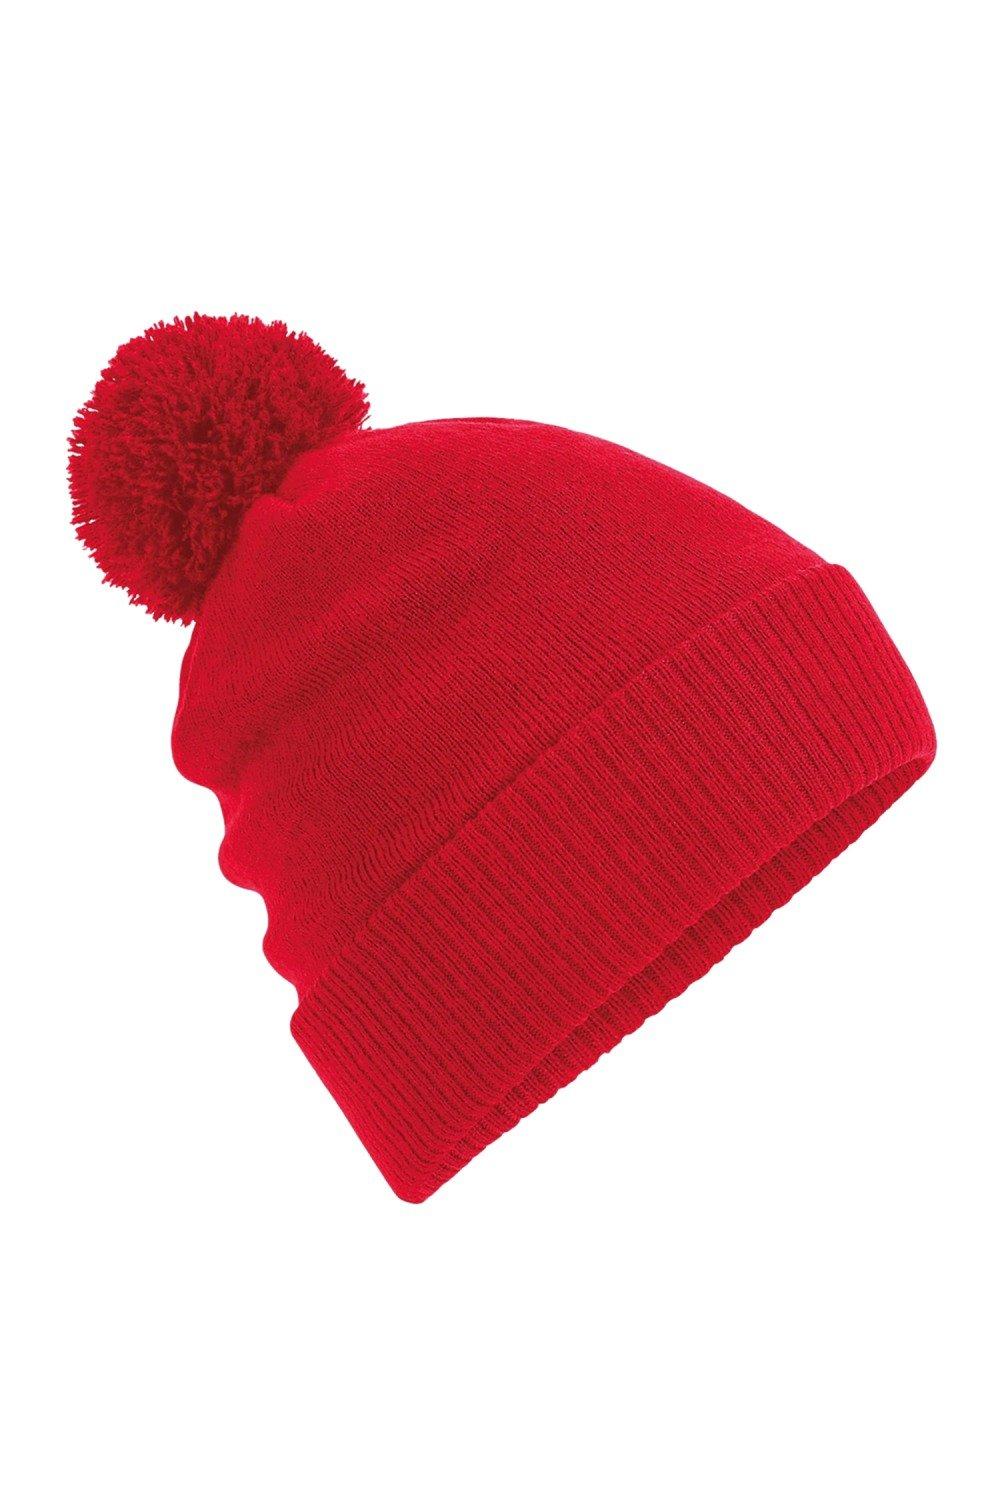 Тепловая шапка Snowstar Beechfield, красный